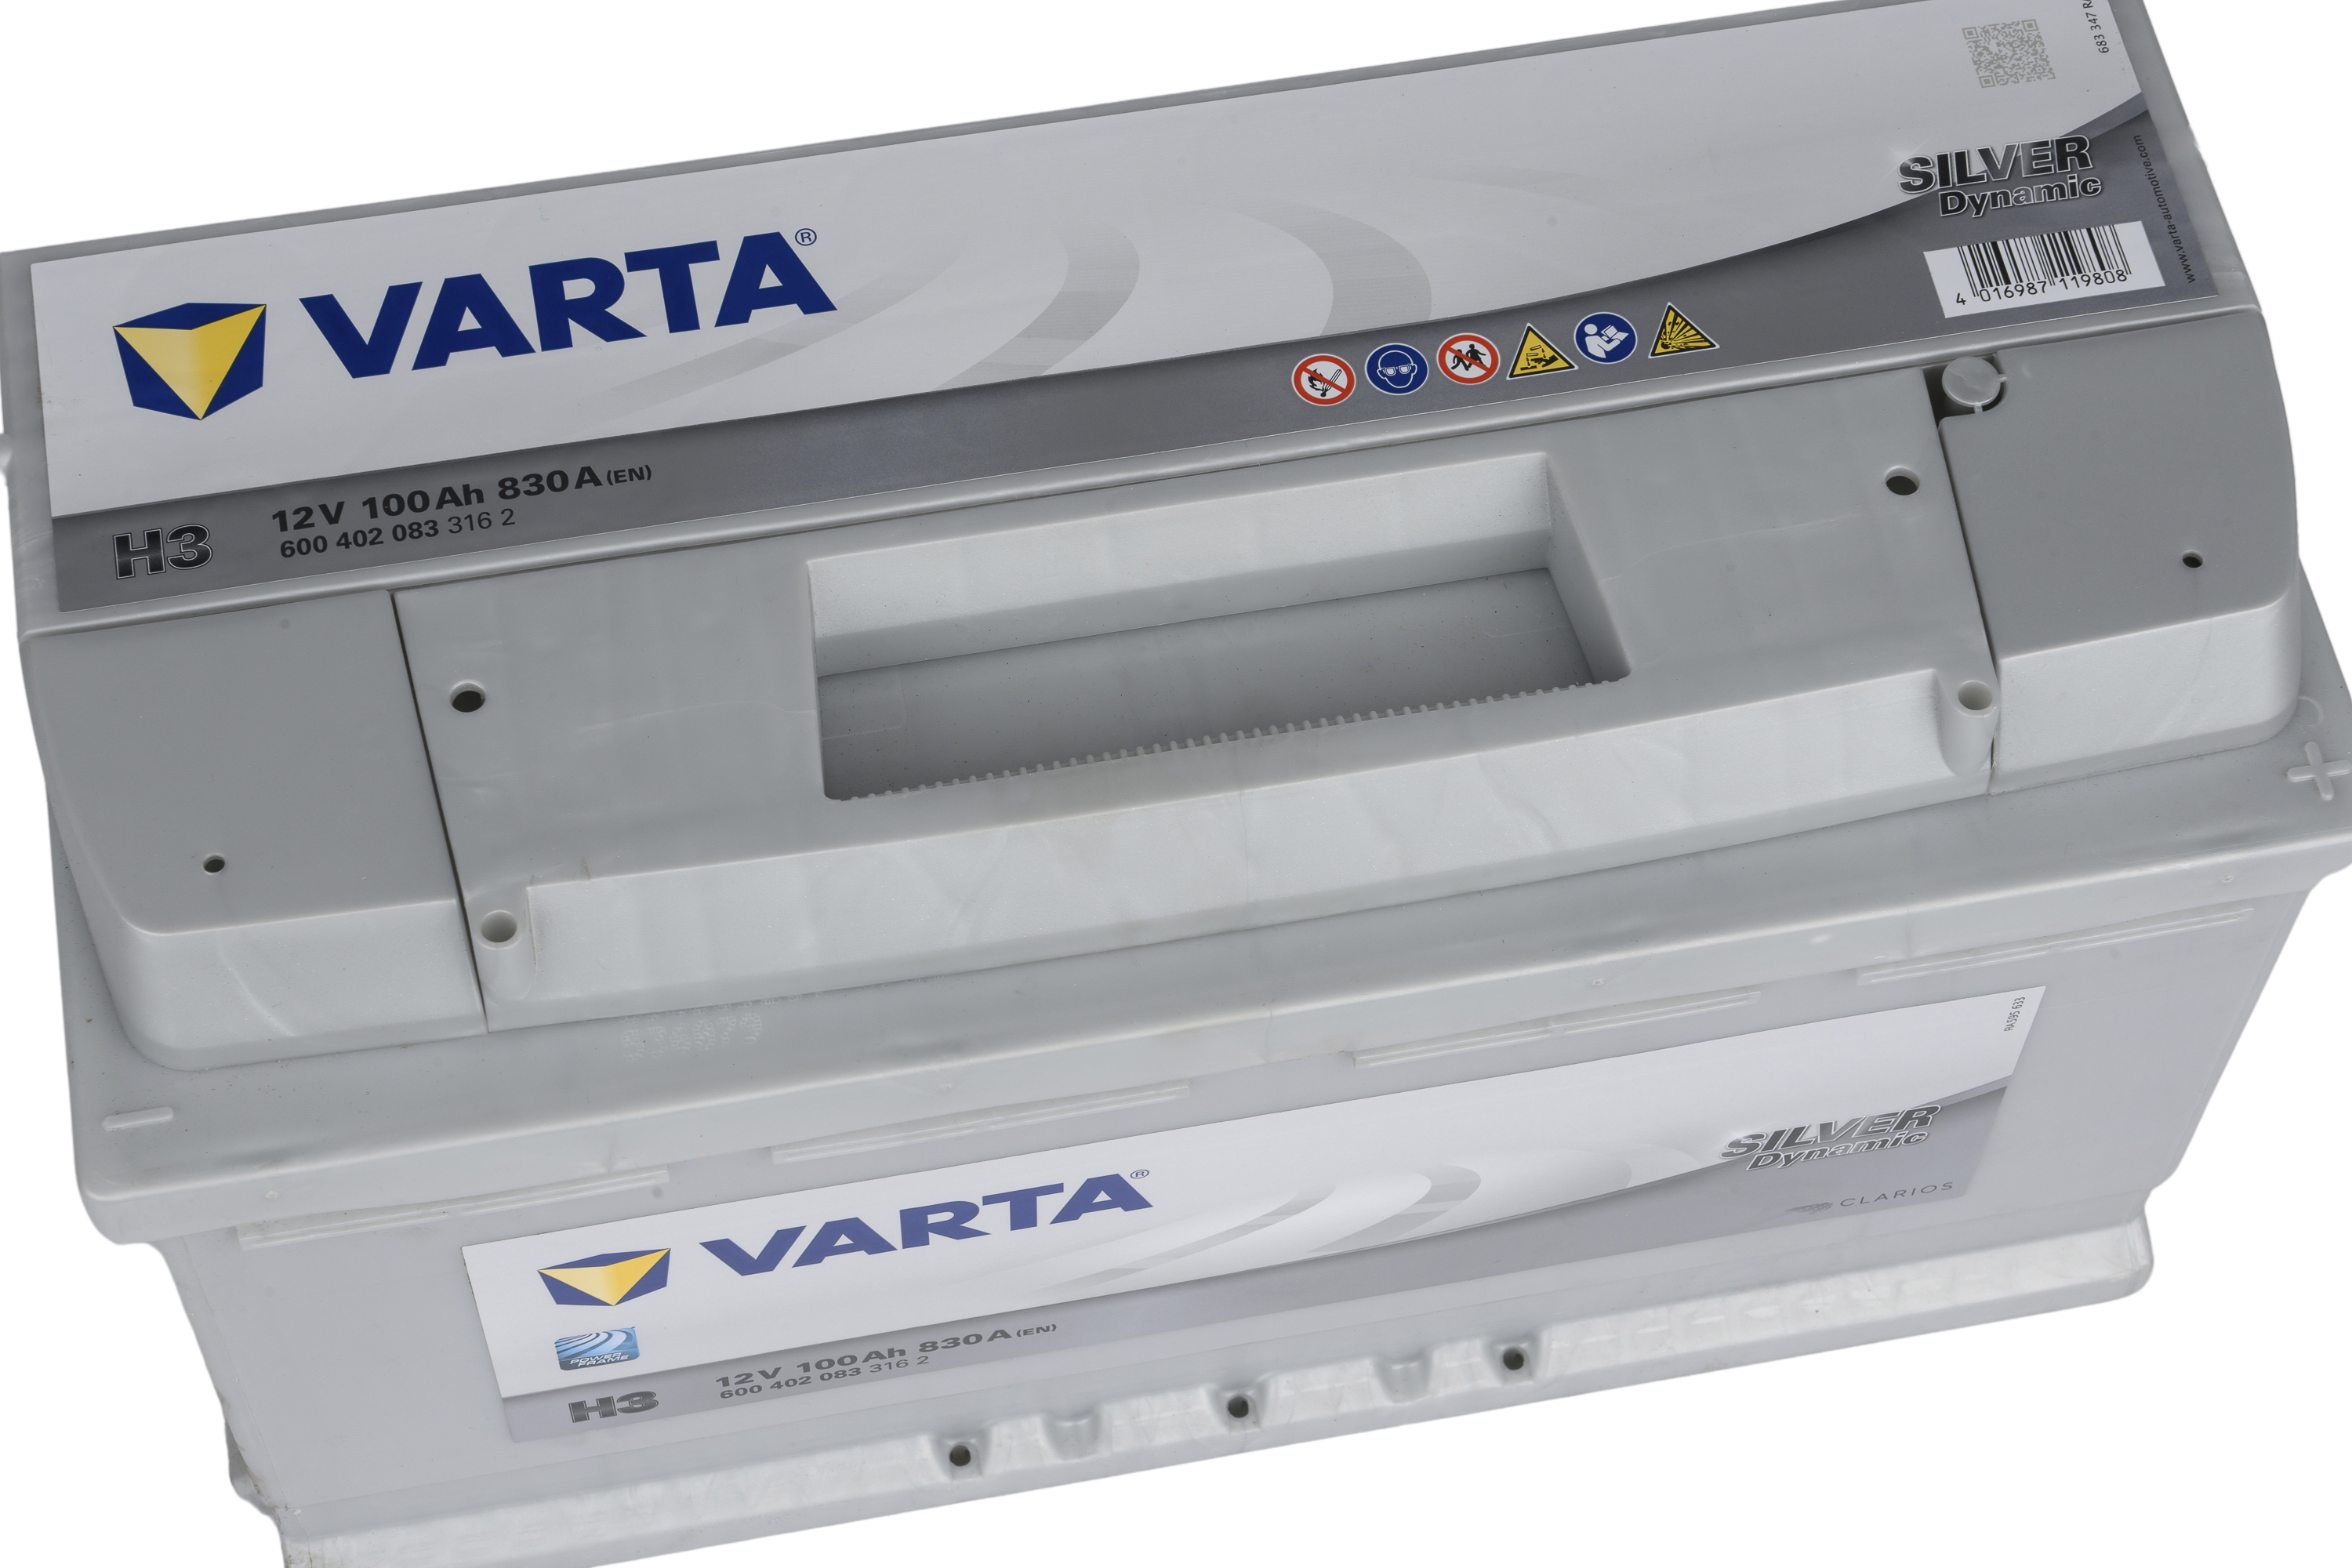 VARTA Battery Silver Dynamic H3 600.402.083 - 12V 100Ah I JVD PARTS